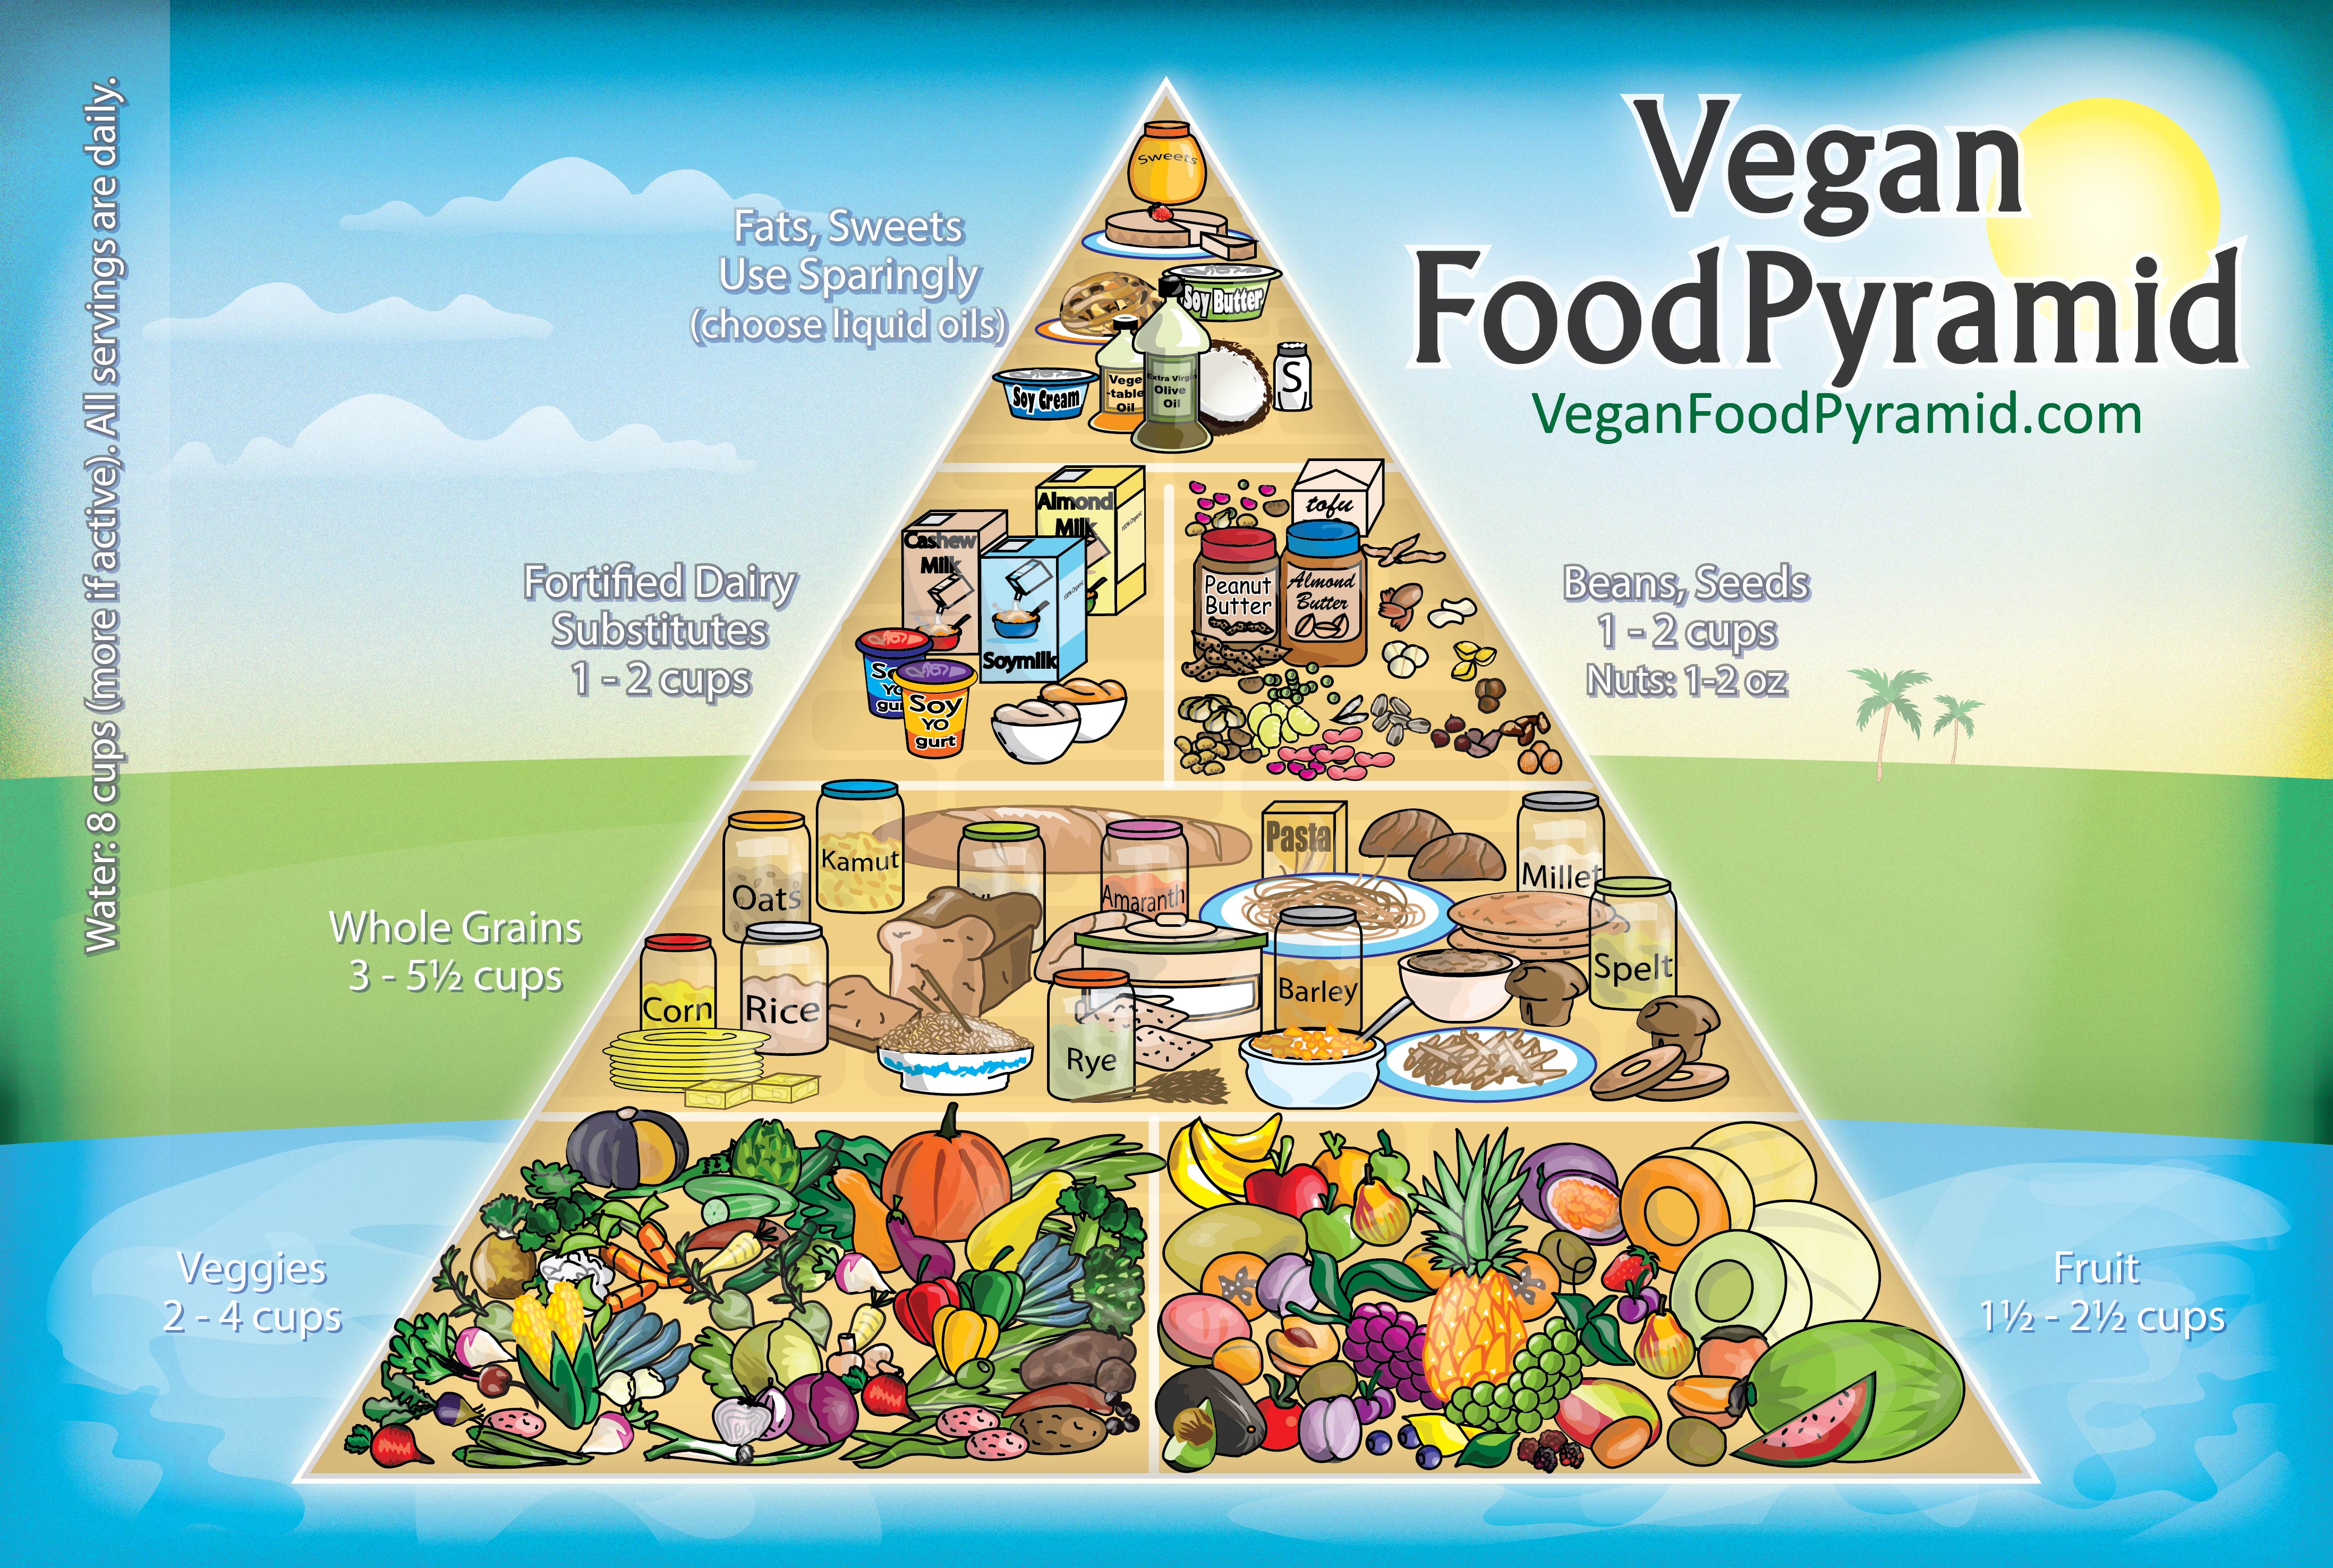 Vegan Food Pyramid,Seafood Gumbo Recipes